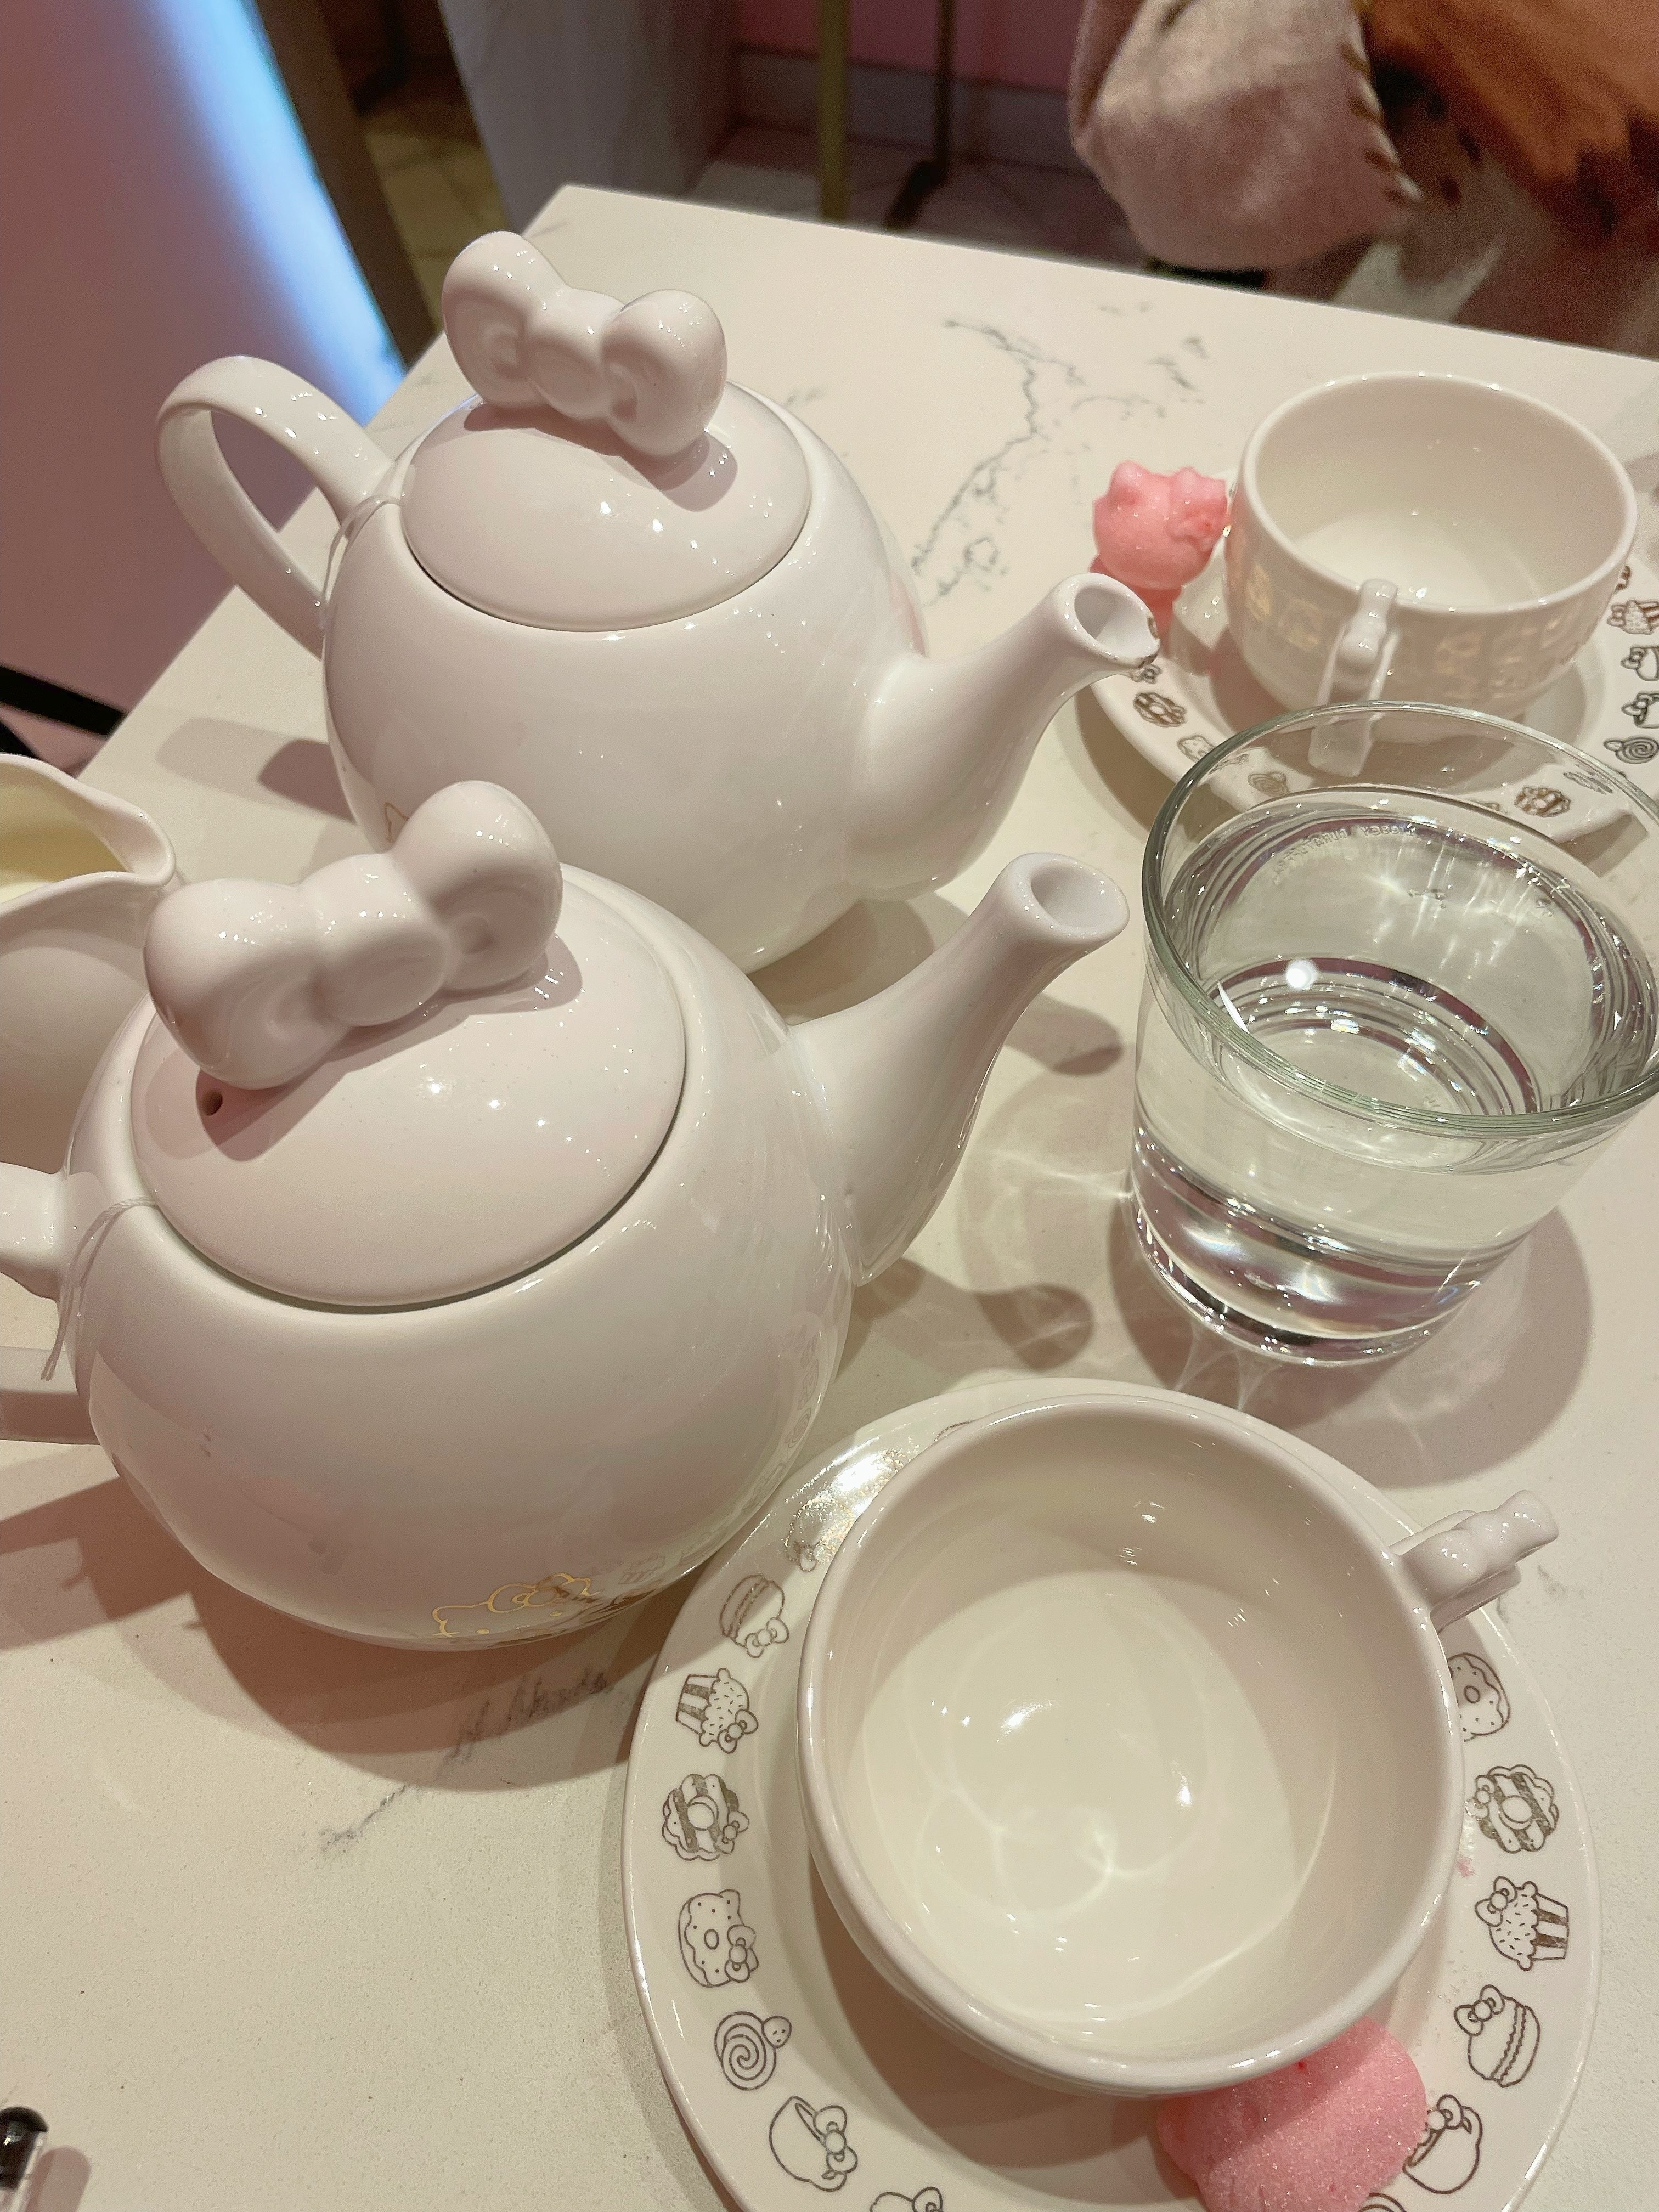 A tea set is spread on the table